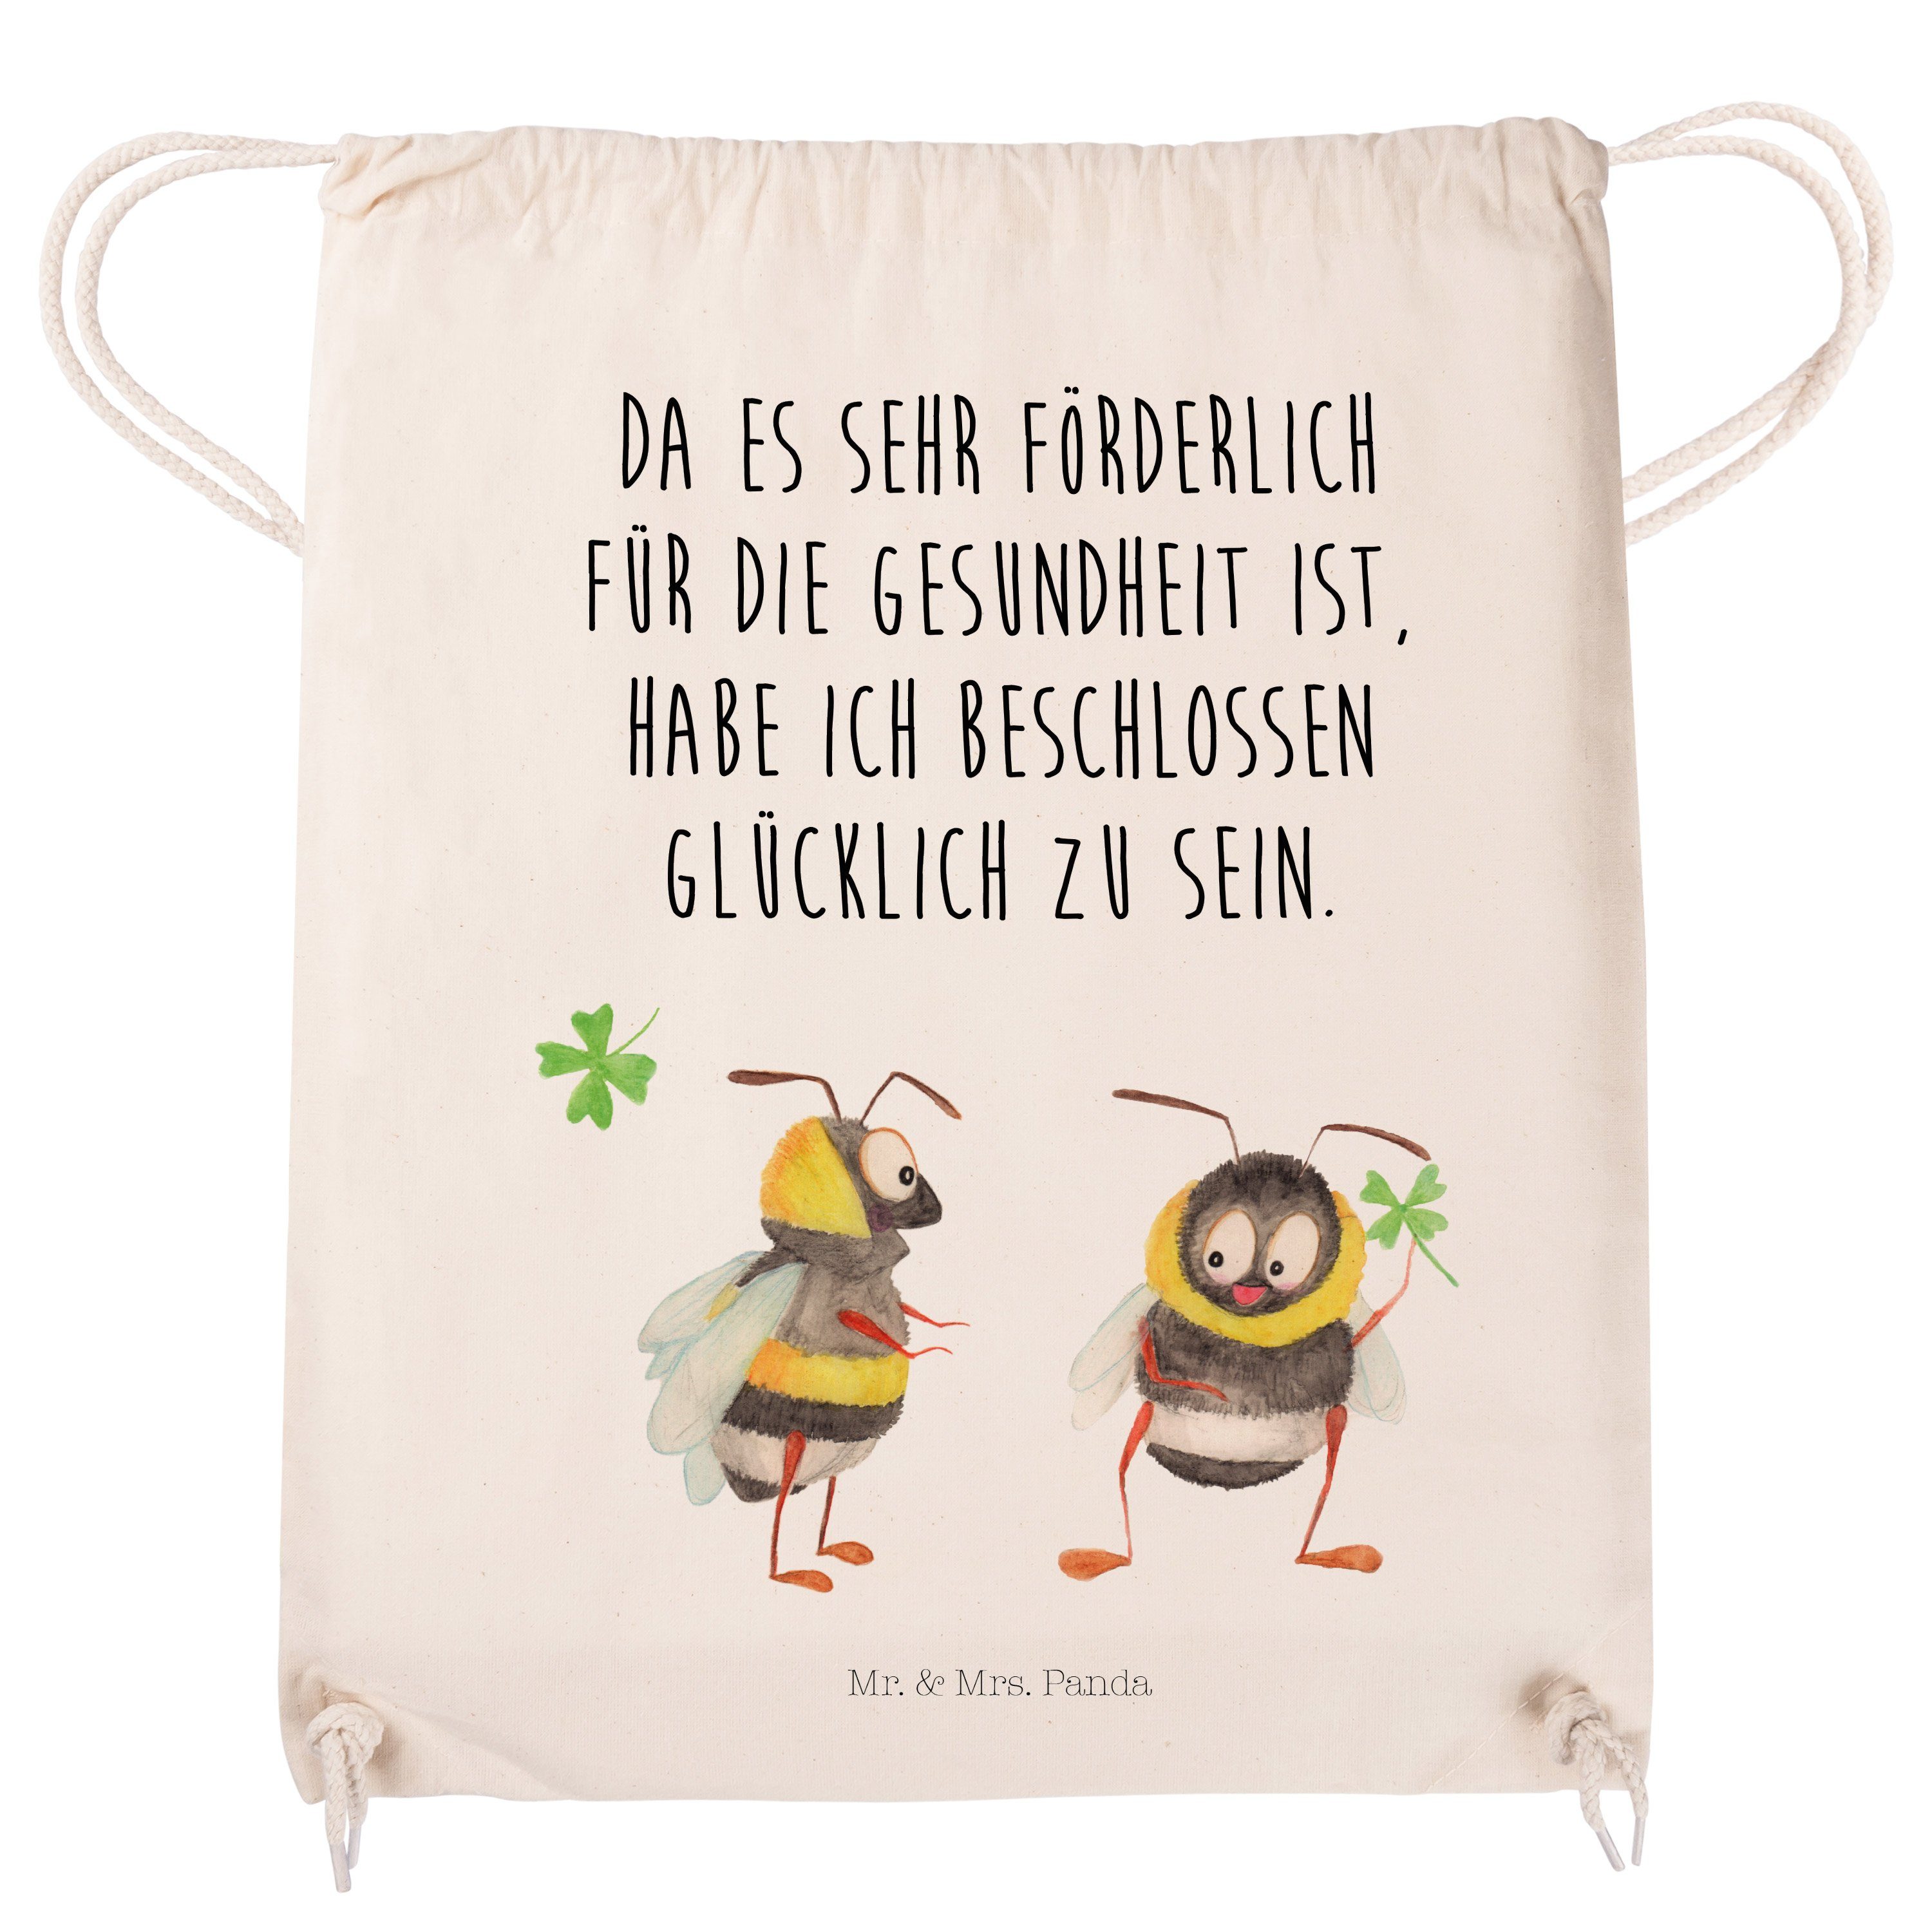 Hummeln Kleeblatt Geschenk, - Transparent Stoffbeutel, (1-tlg) Sporttasche Sportbeu & mit - Panda Mrs. Mr.